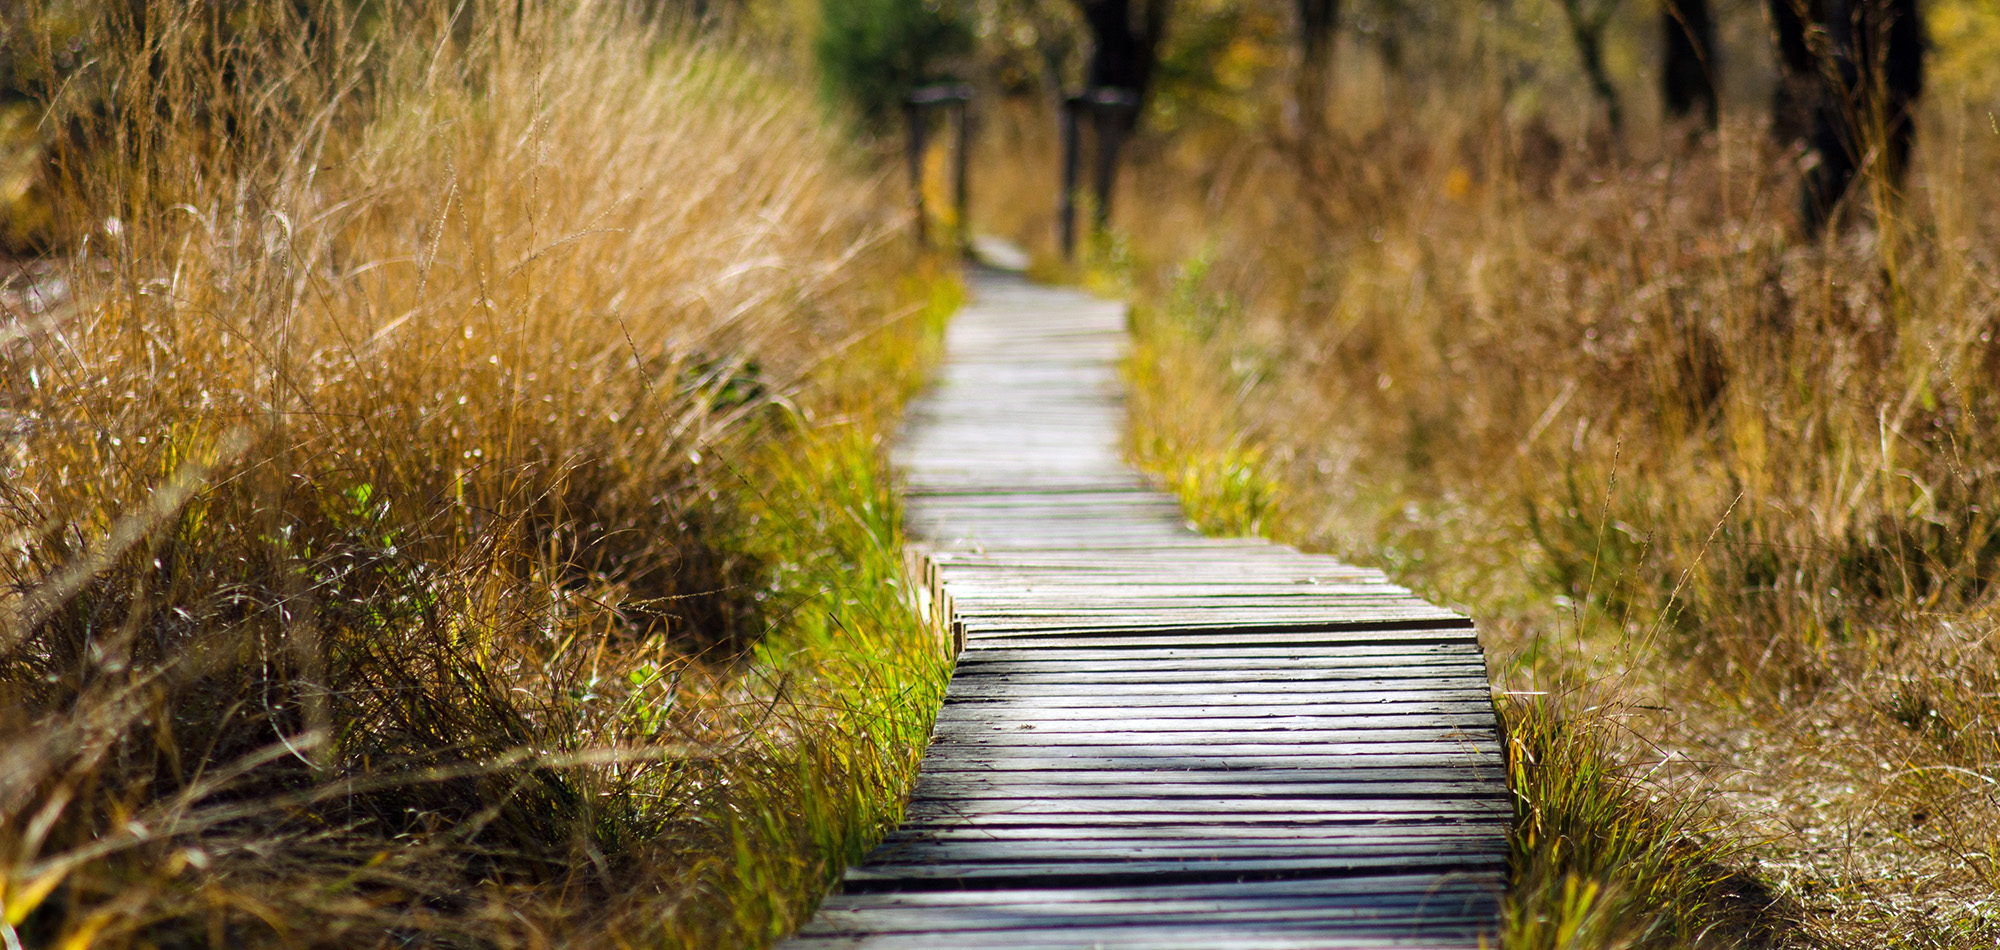 A wooden bridge winding through nature with tall grass